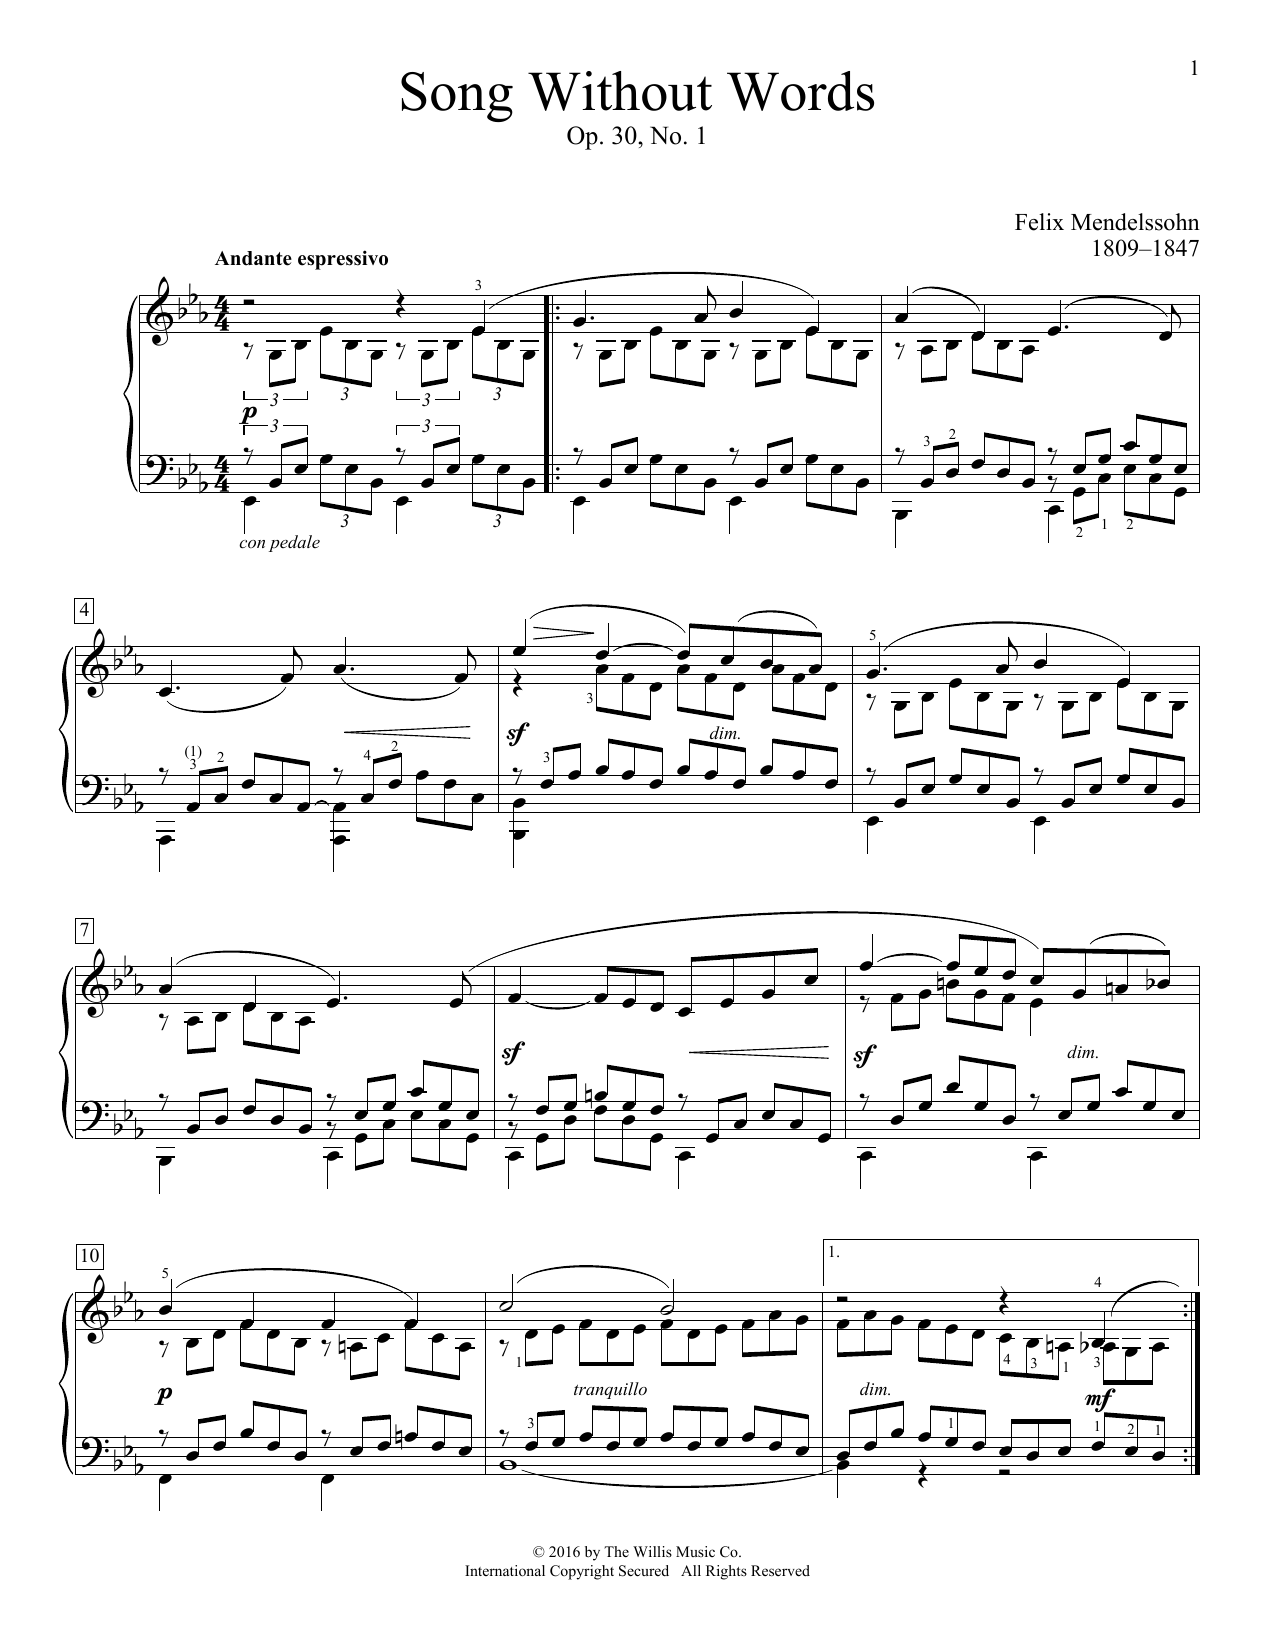 Felix Mendelssohn "Song Without Words, Op. 30, No. 1" Sheet Music Notes